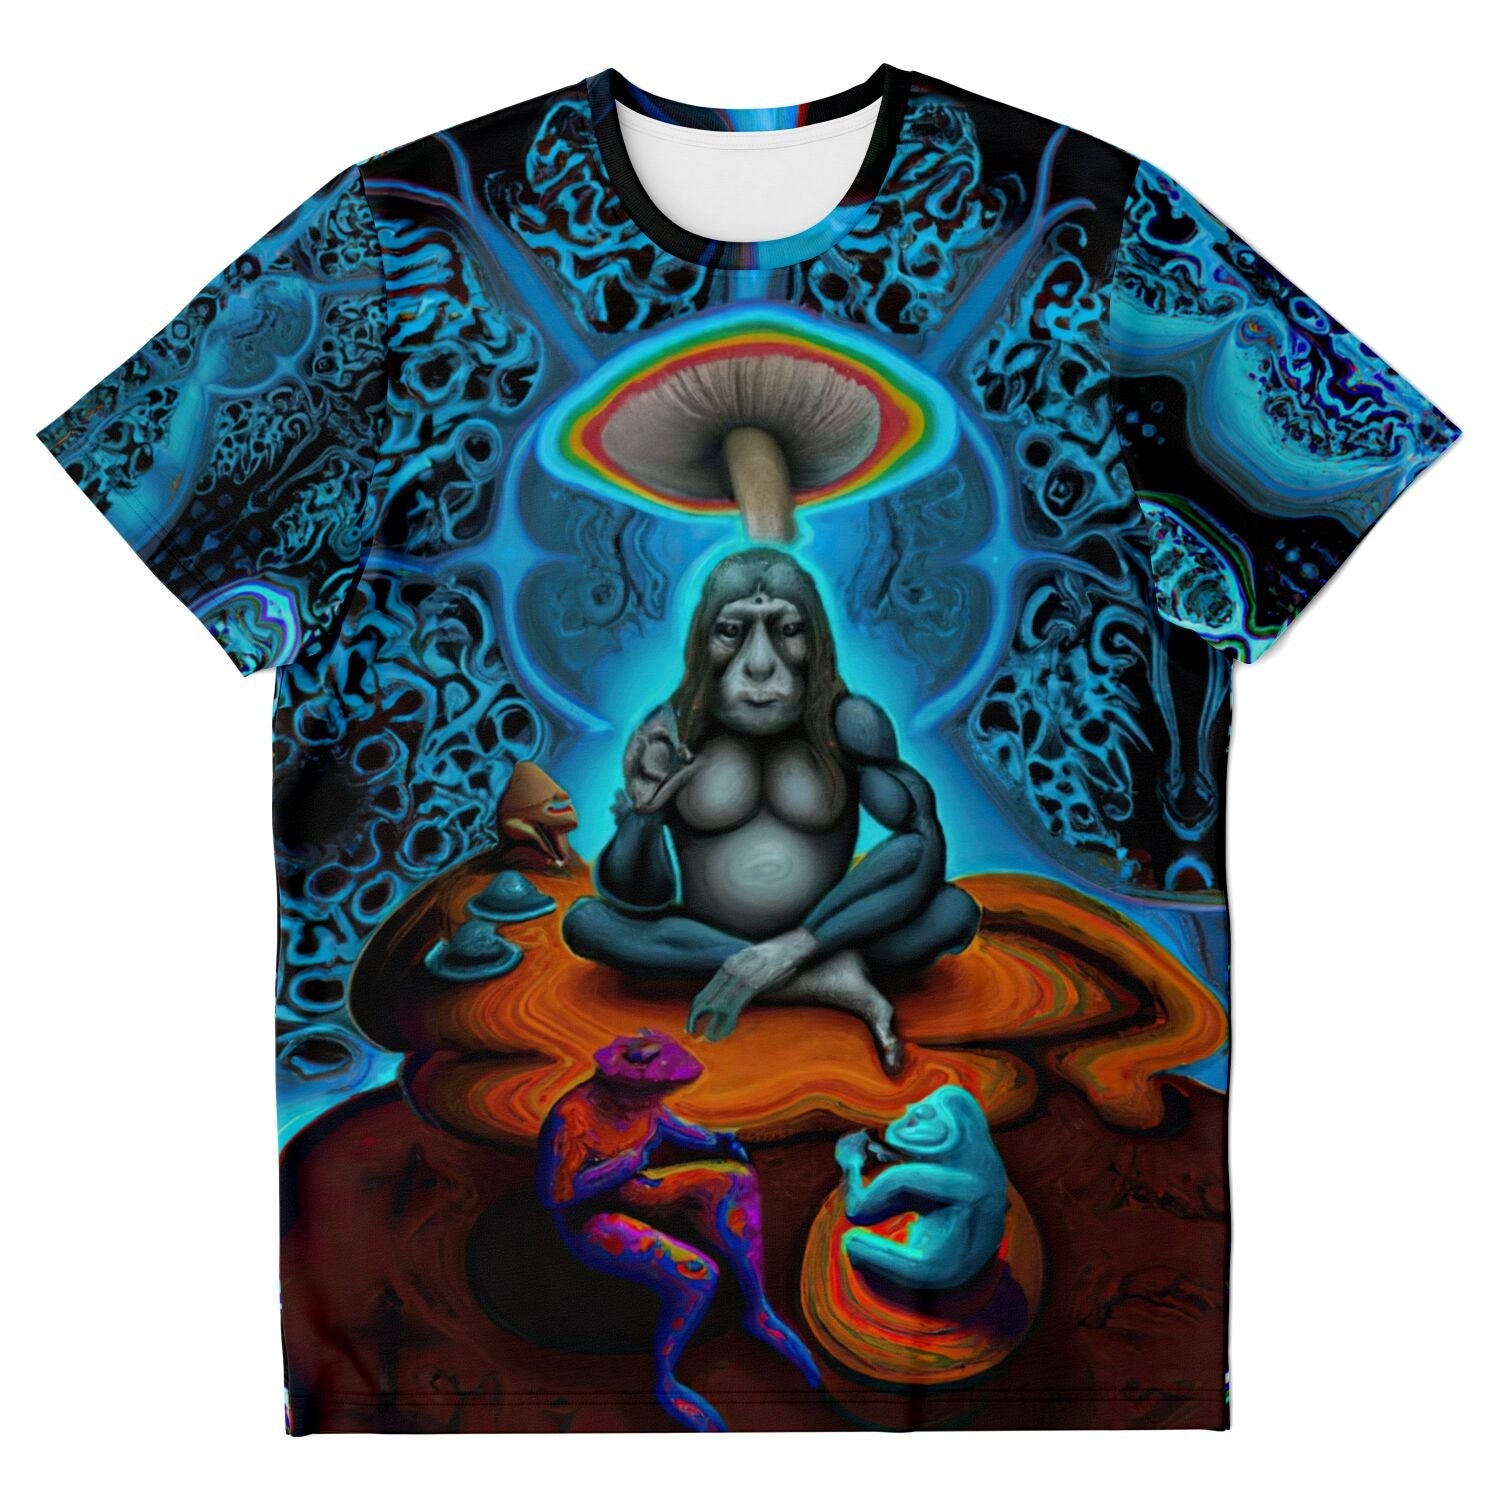 T-shirt XS Stoned Ape Theory | Psychedelic Evolution | DMT, LSD, Ayahuasca, McKenna | Trippy Digital Art T-Shirt